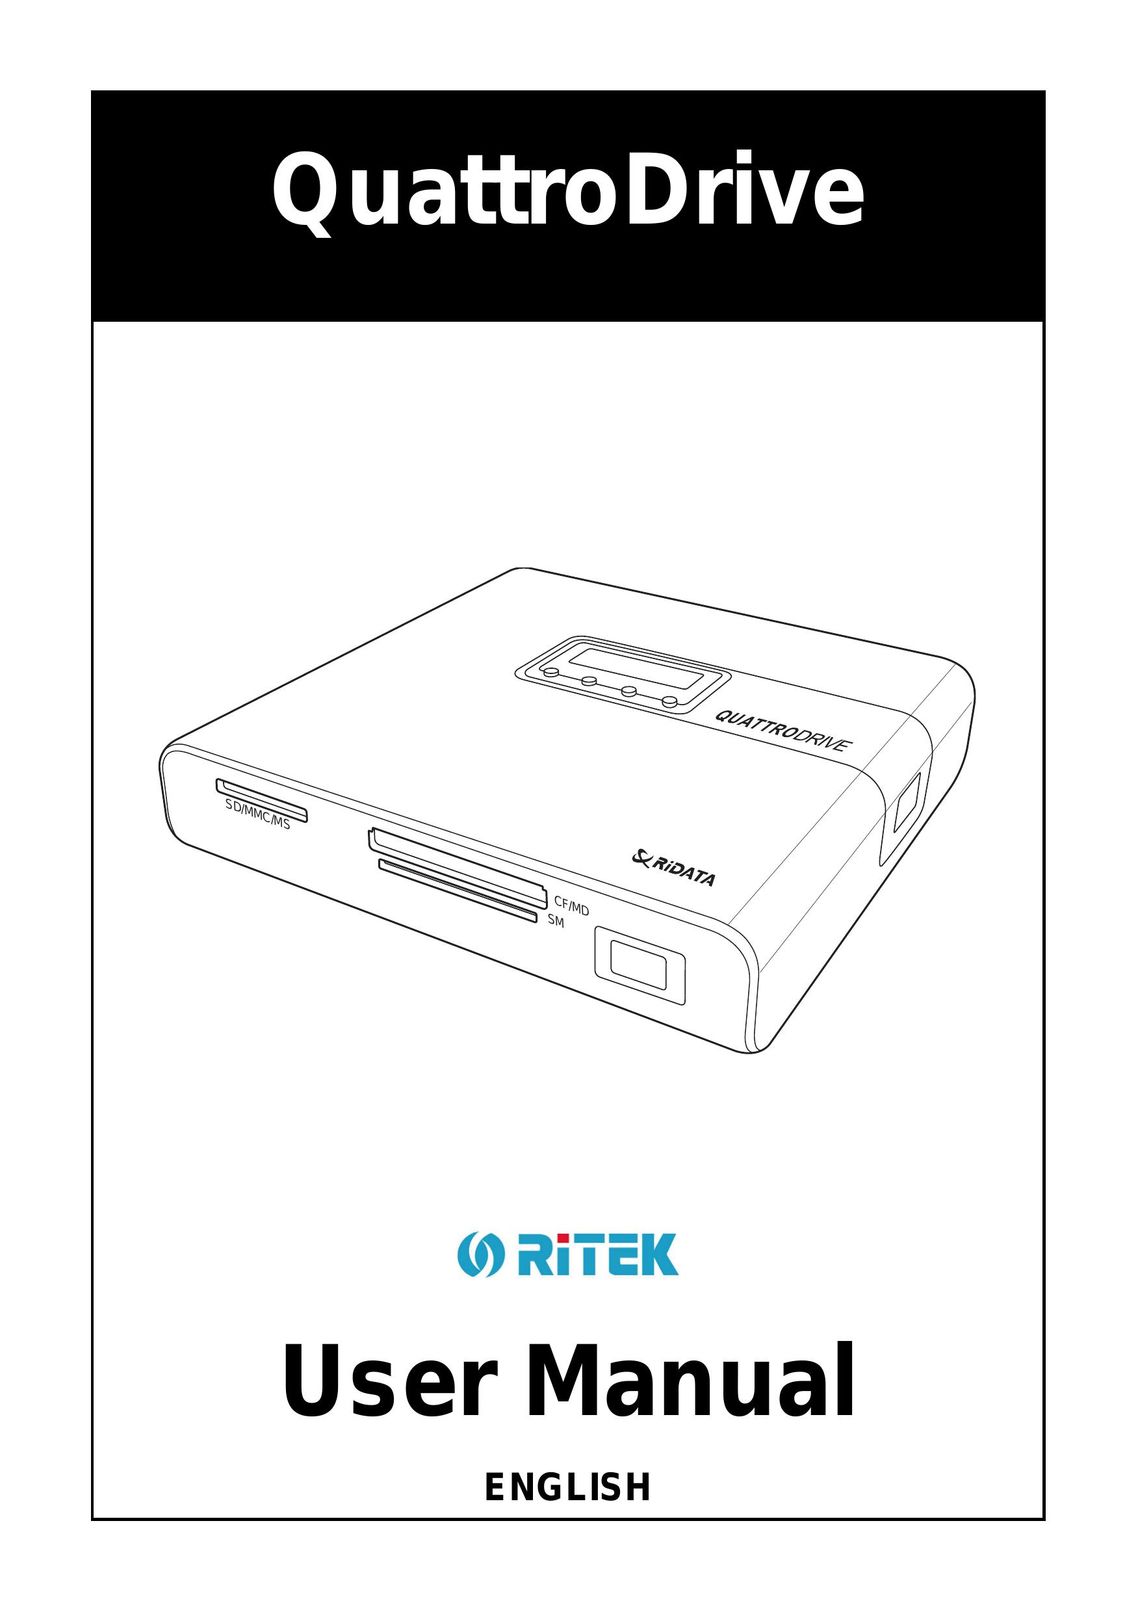 Ritek QuattroDrive MP3 Player User Manual